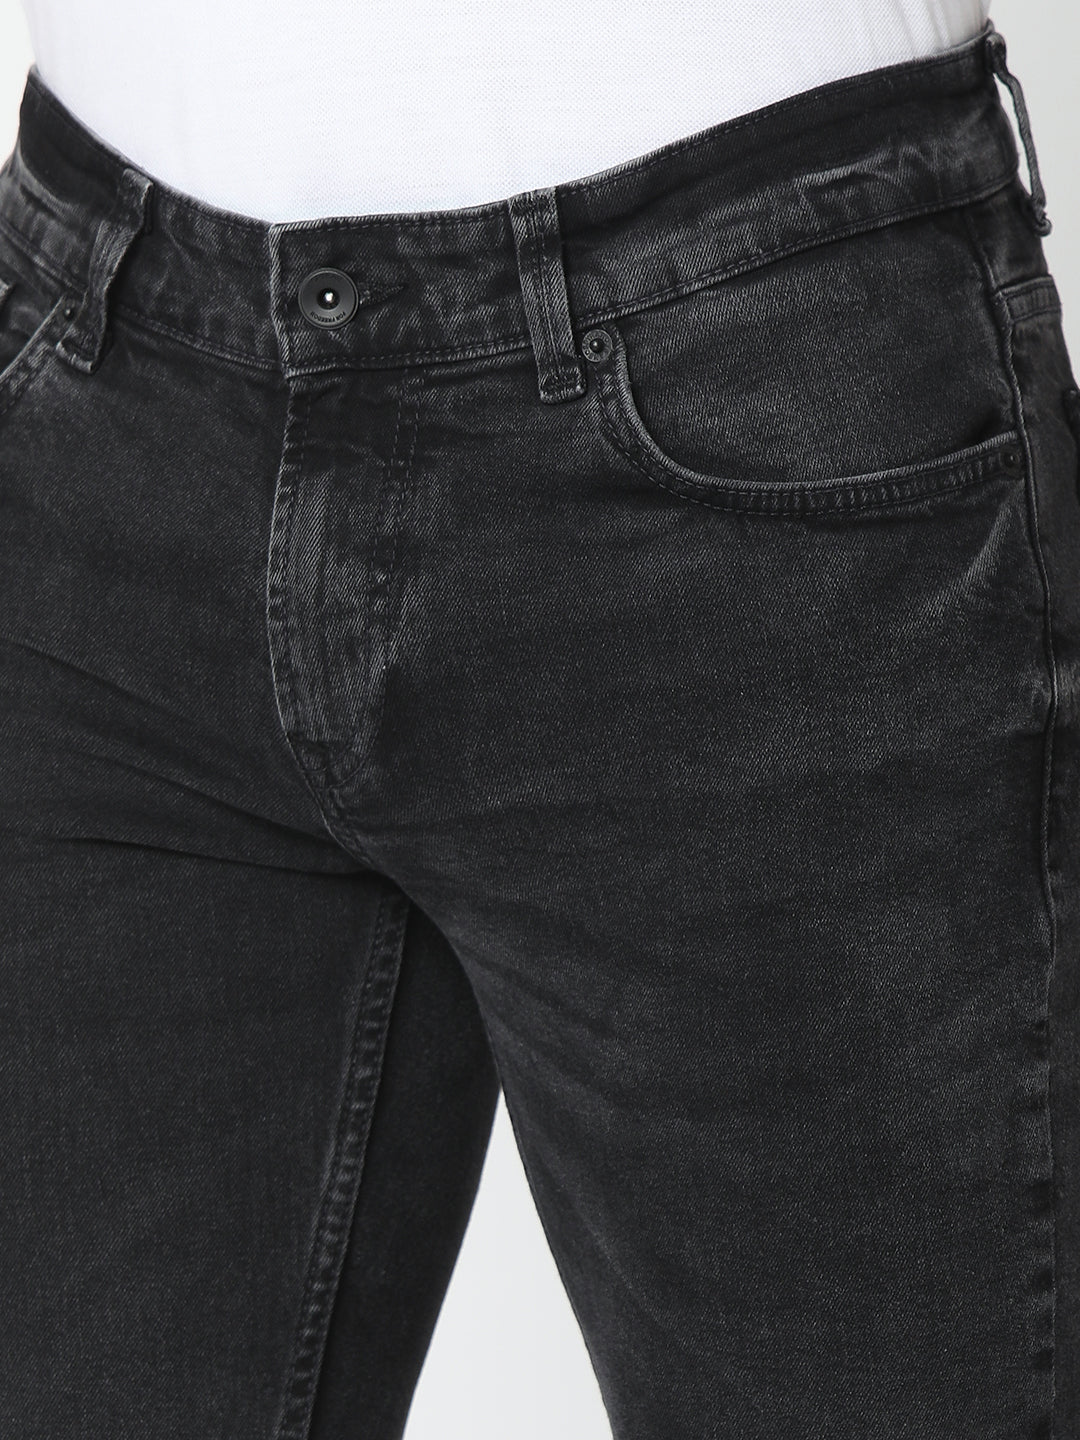 Spykar Charcoal Black Slim Fit Narrow Length Jeans For Men (Skinny)